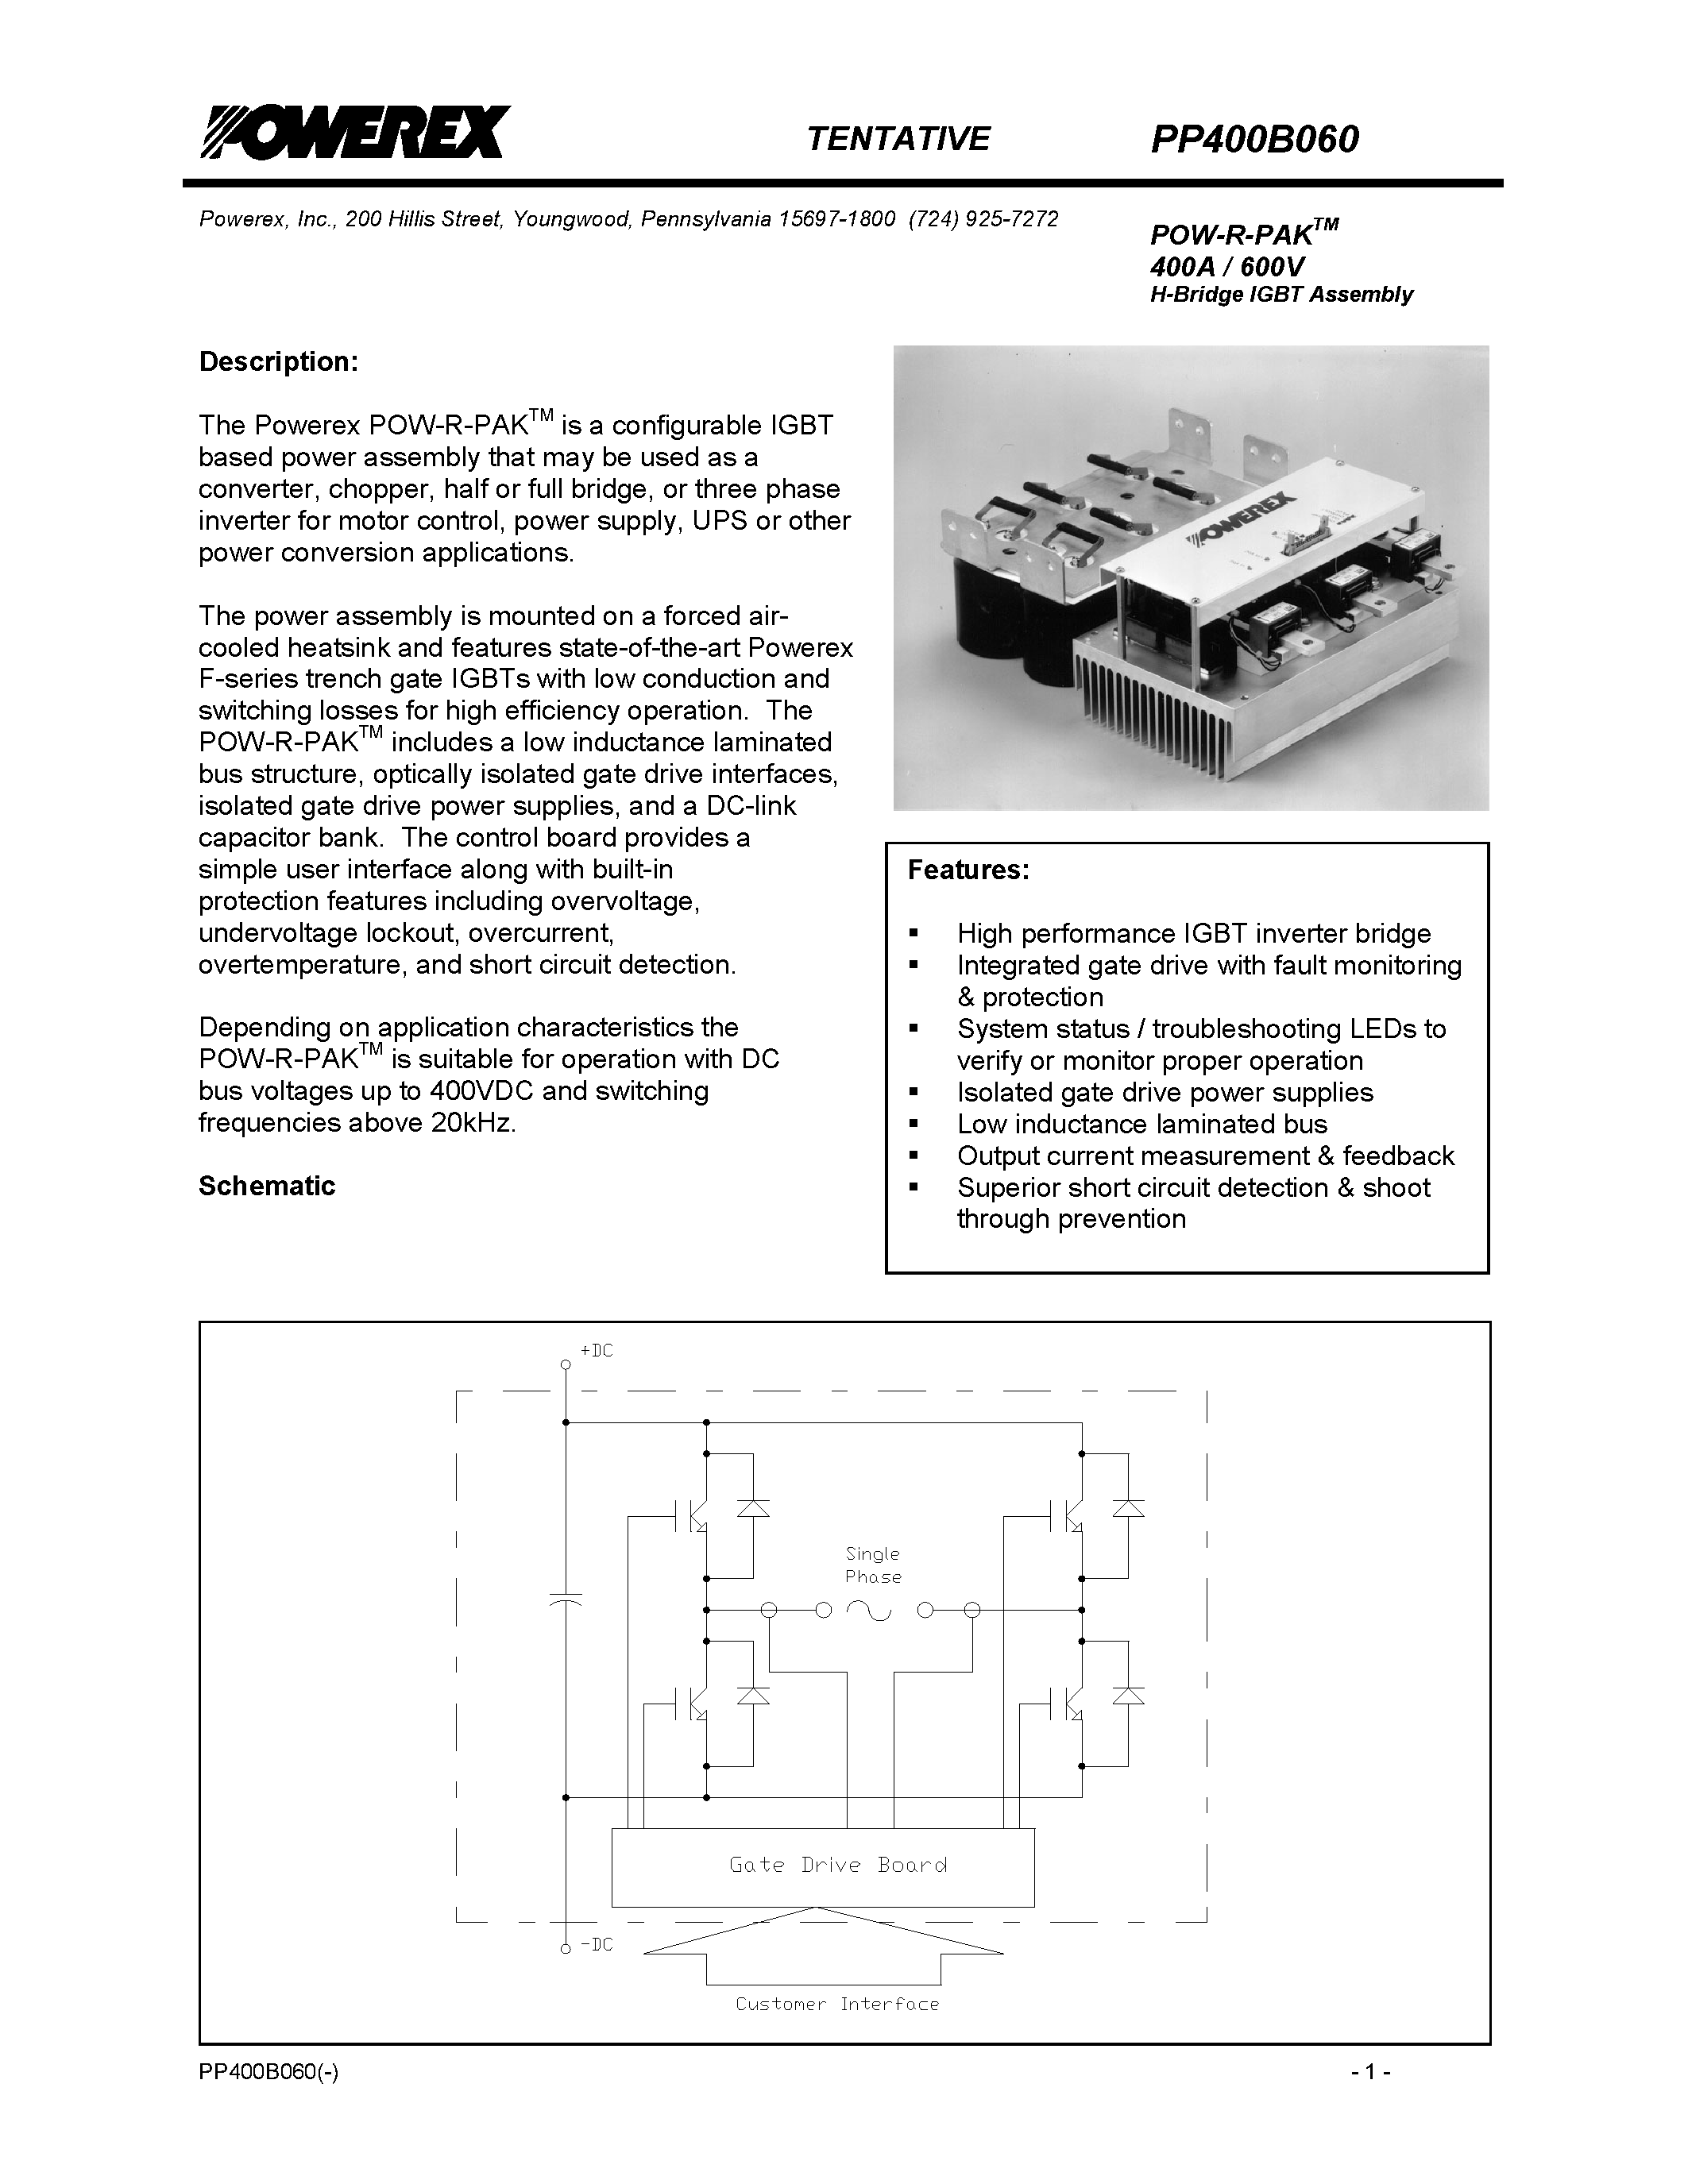 Даташит PP400B060 - POW-R-PAK 400A / 600V H-Bridge IGBT Assembly страница 1